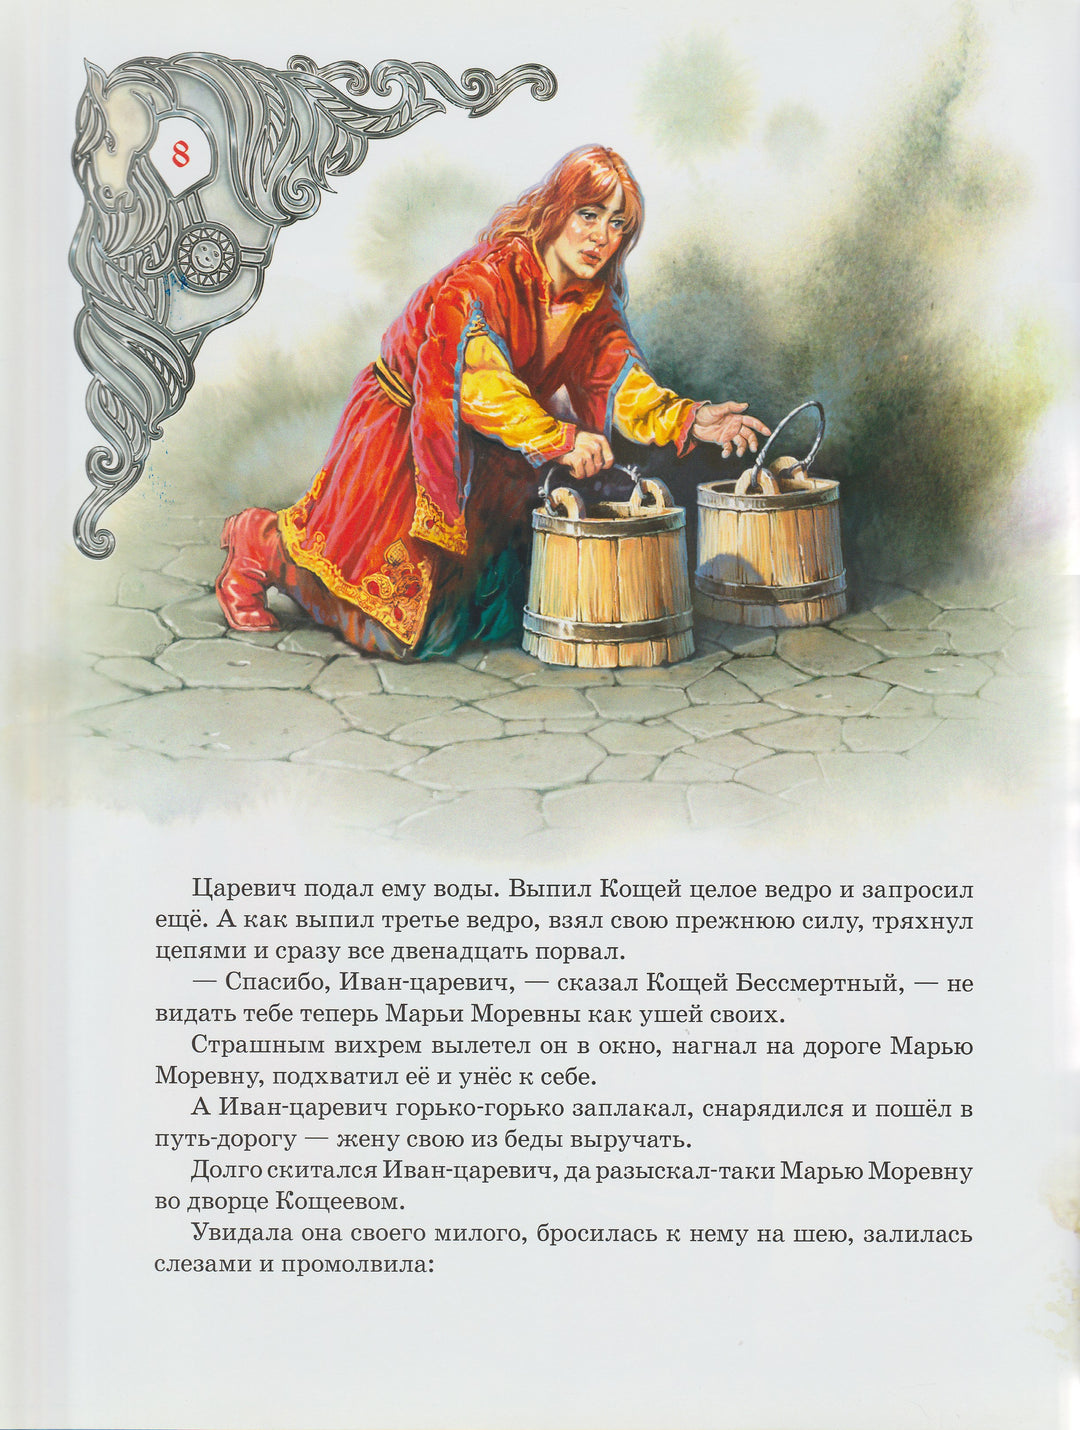 Русские волшебные сказки (пер А. Афанасьев)-Афанасьев А.-Росмэн-Lookomorie